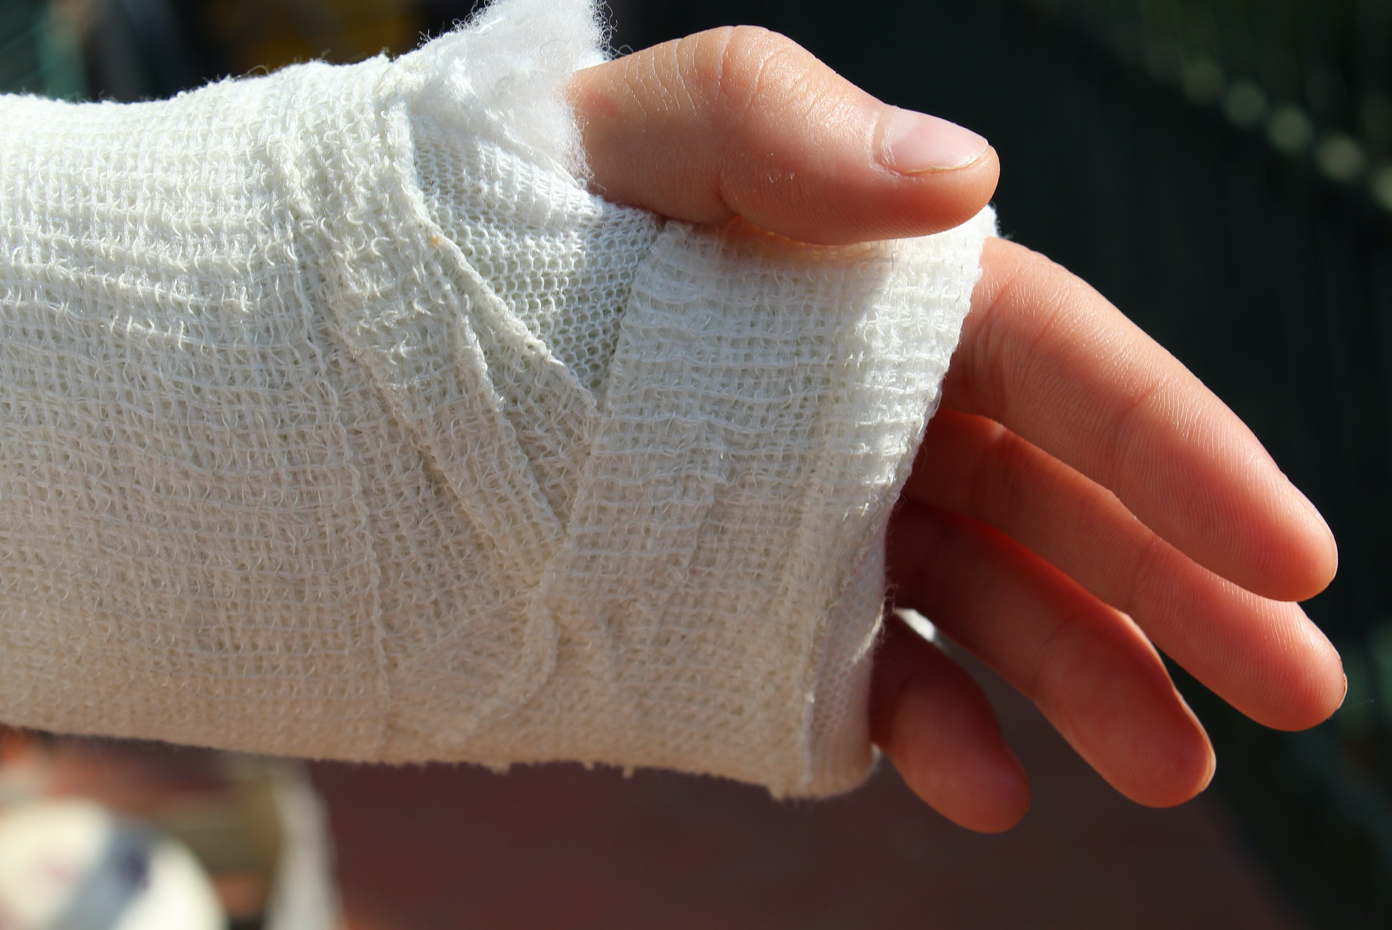 Bandaged hand; image by sferraio1968, via Pixabay.com.